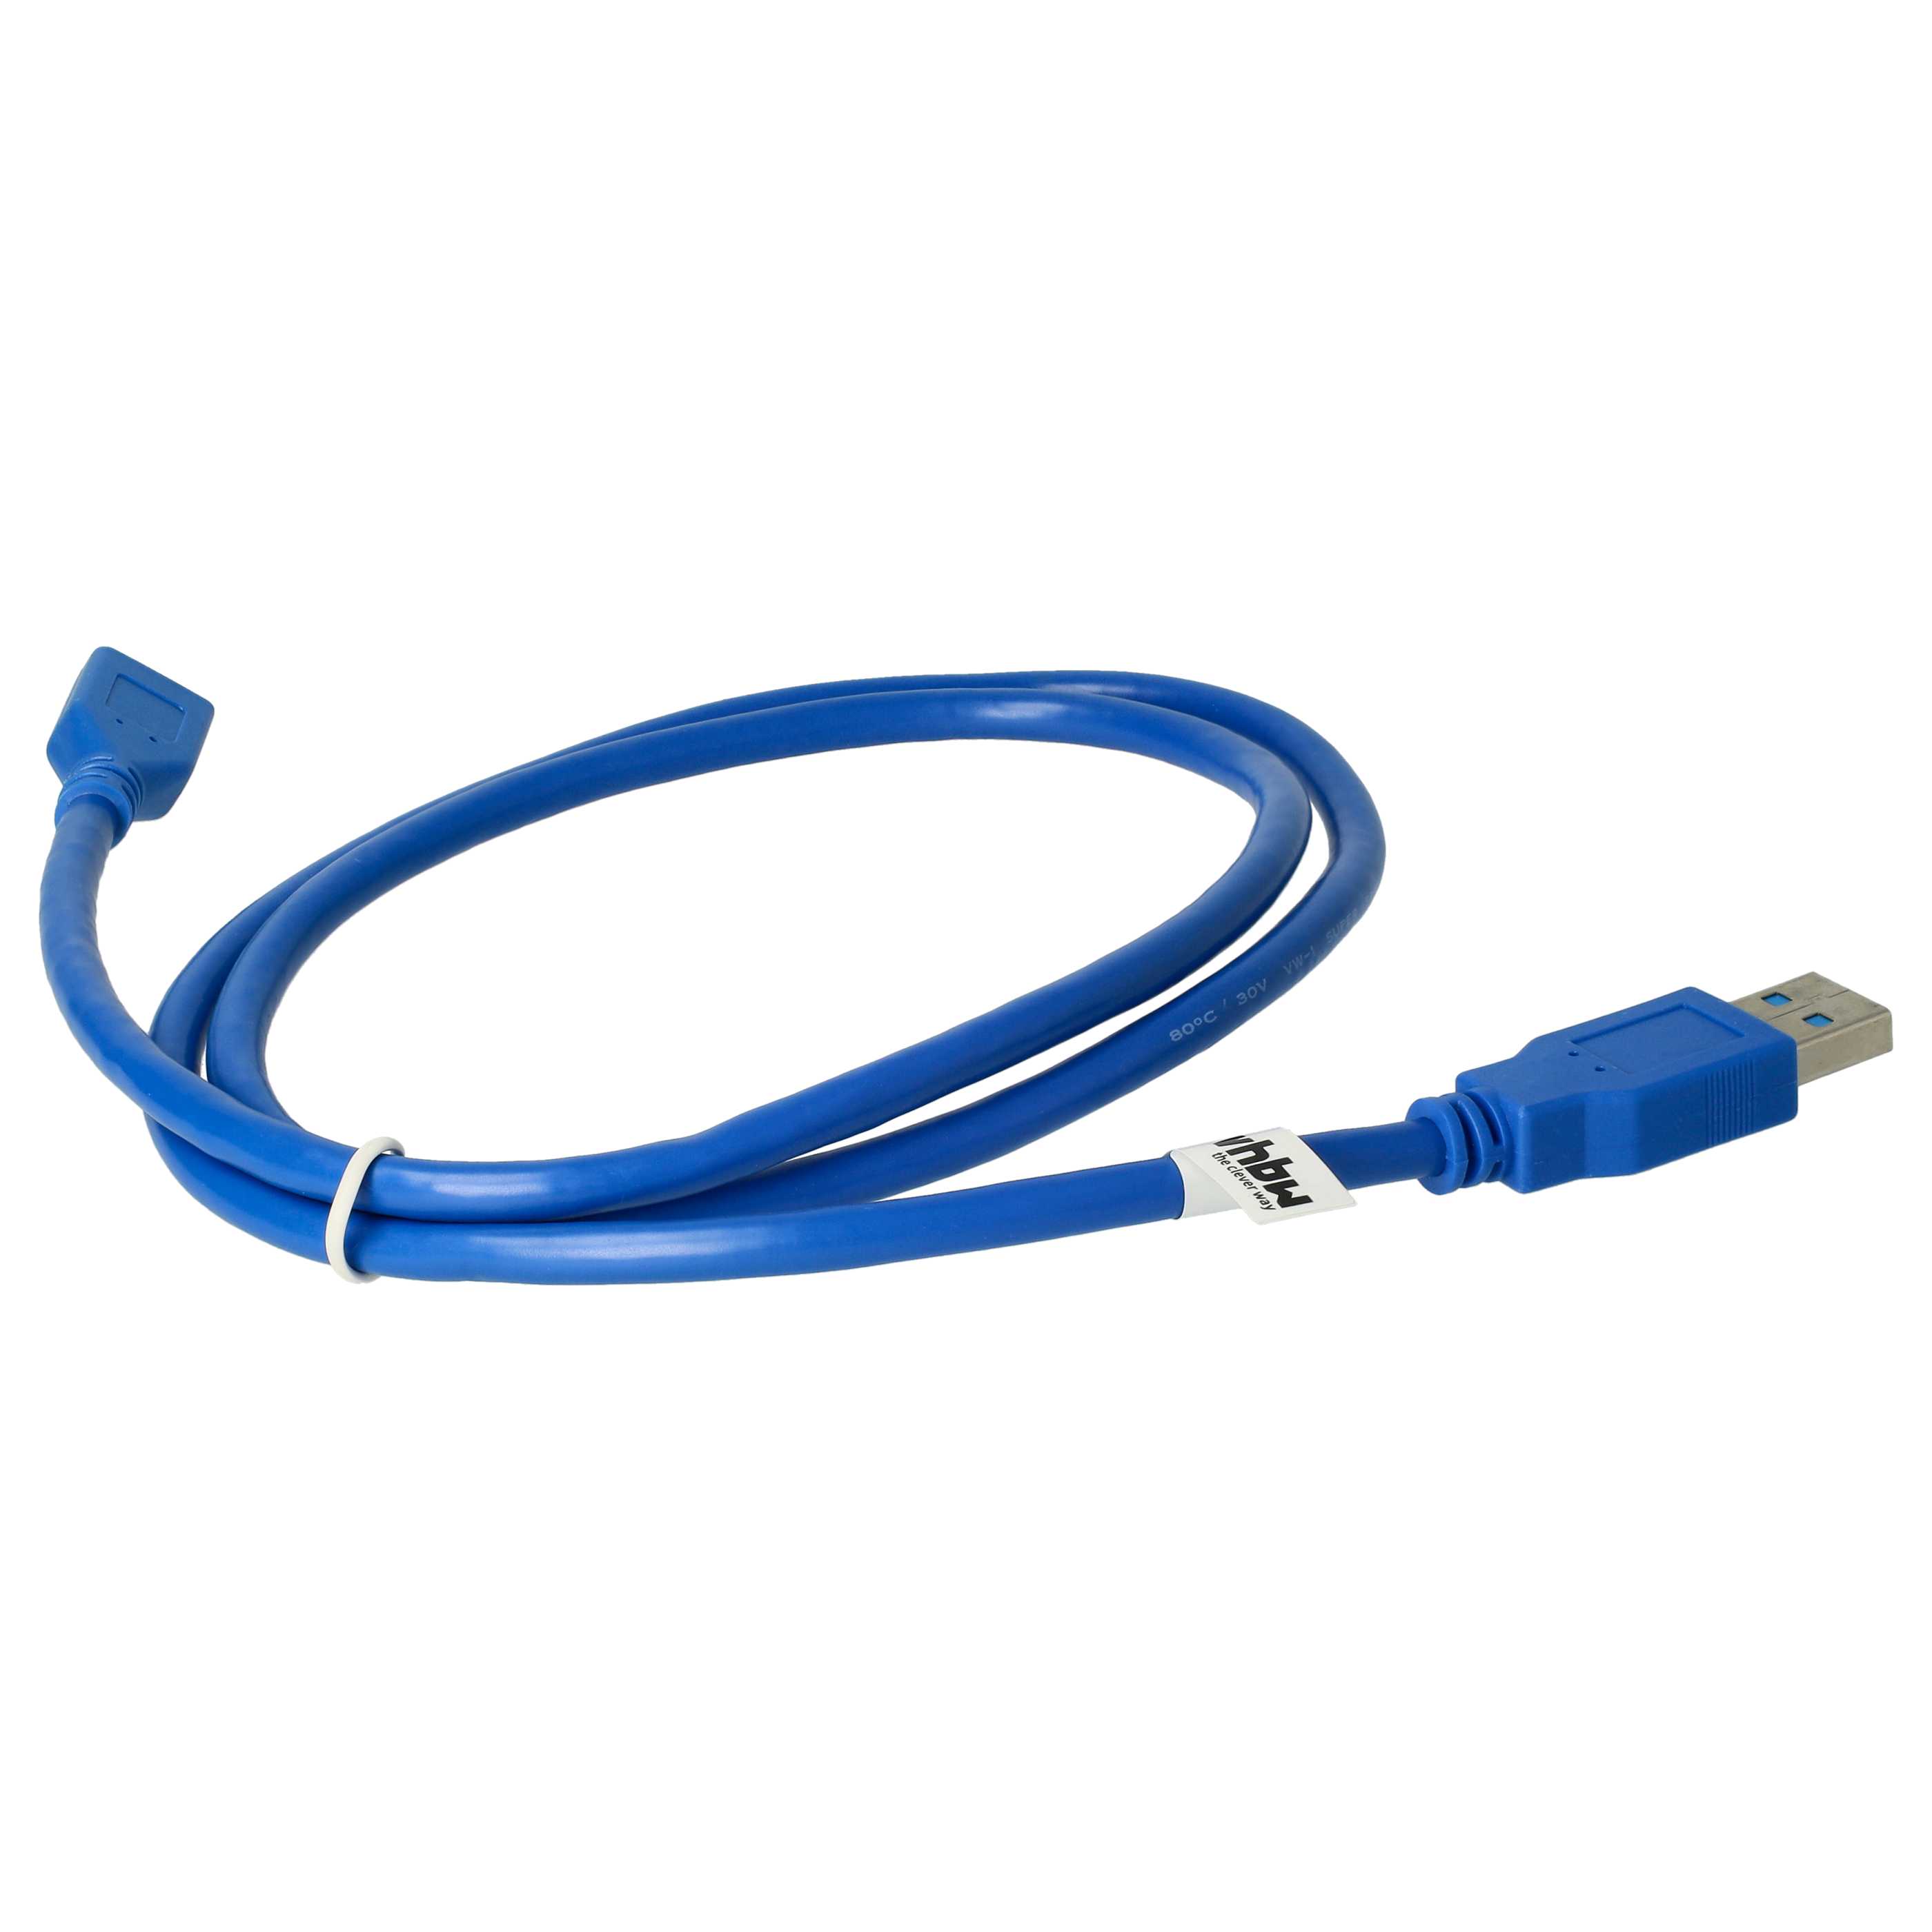 Cable USB Micro (USB std. A a USB Micro 3.0) para dispositivos Buffalo HD-AVSU3 Media Hard Drive